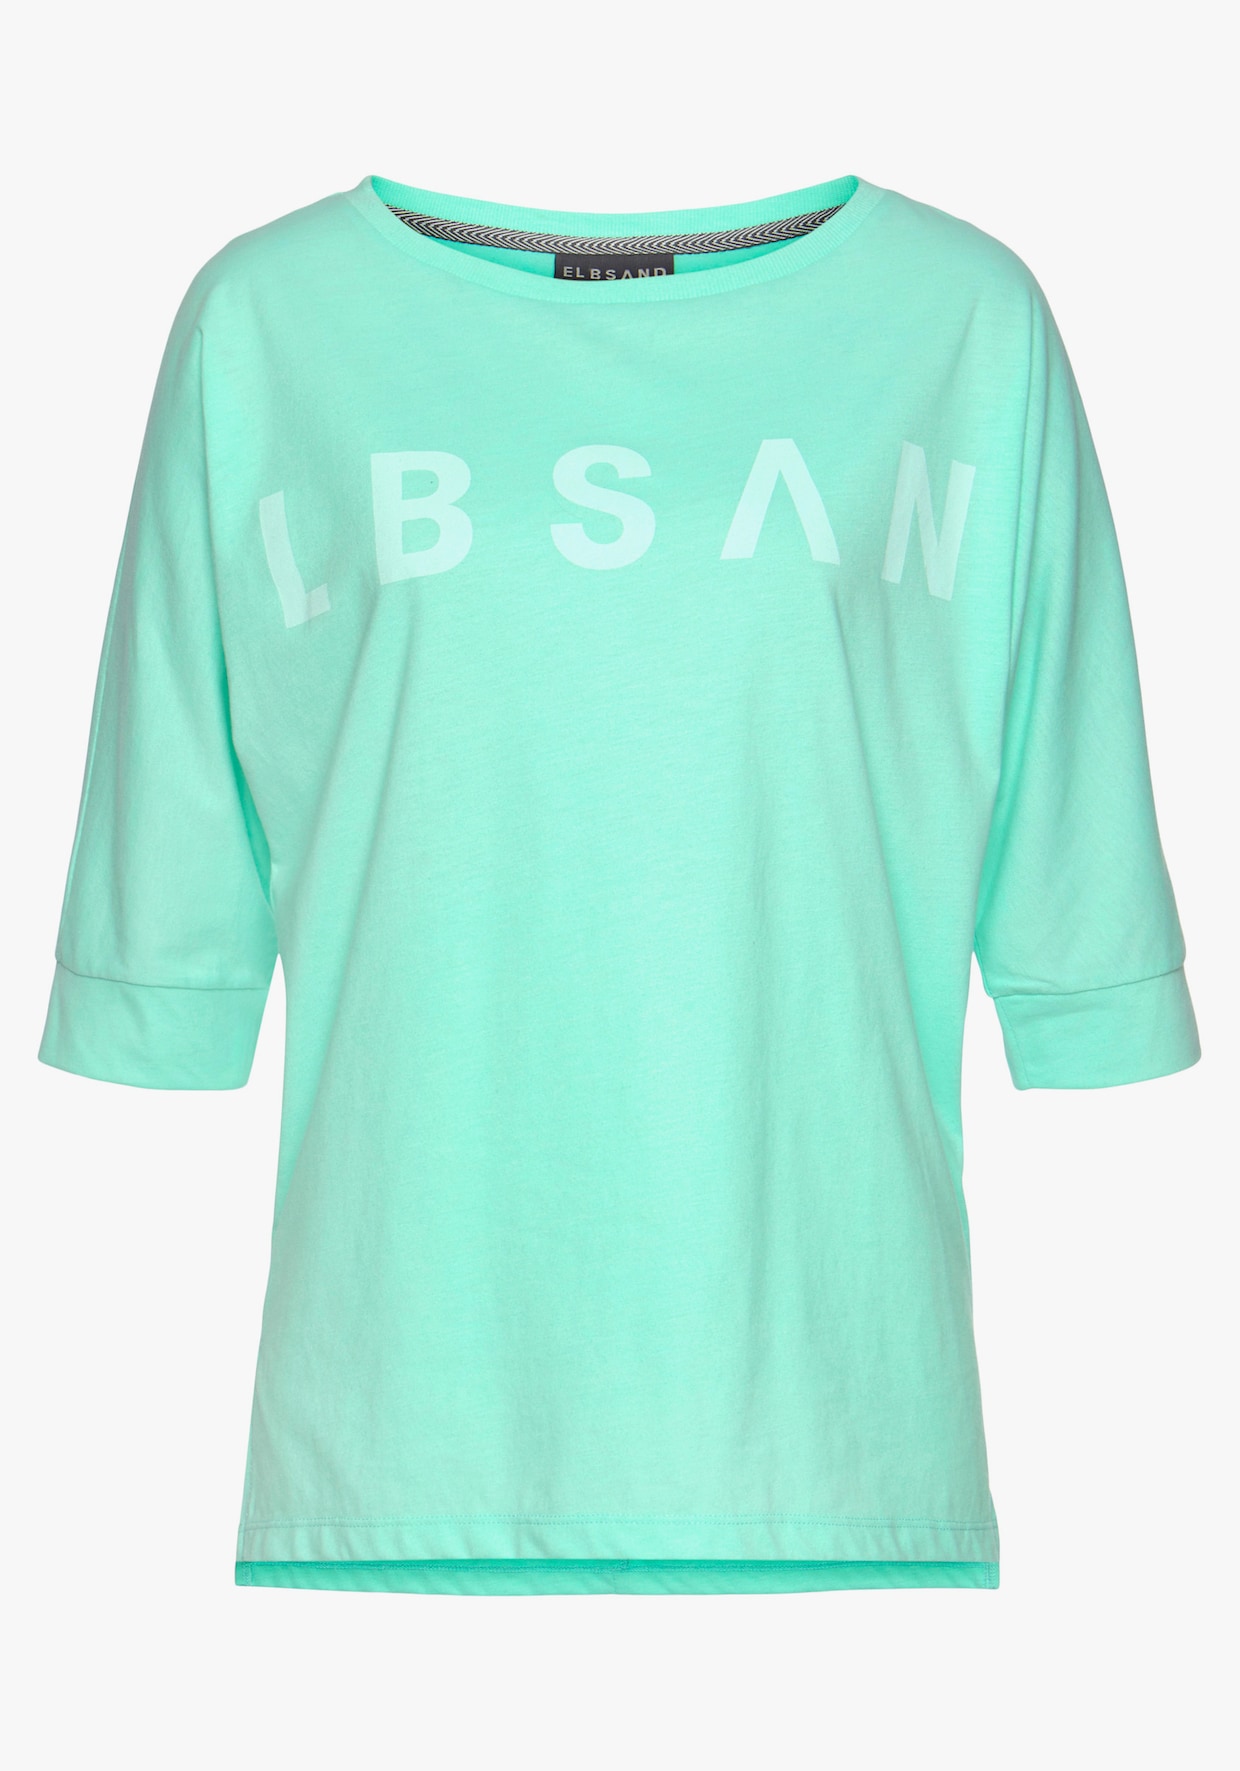 Elbsand 3/4-Arm-Shirt - mint